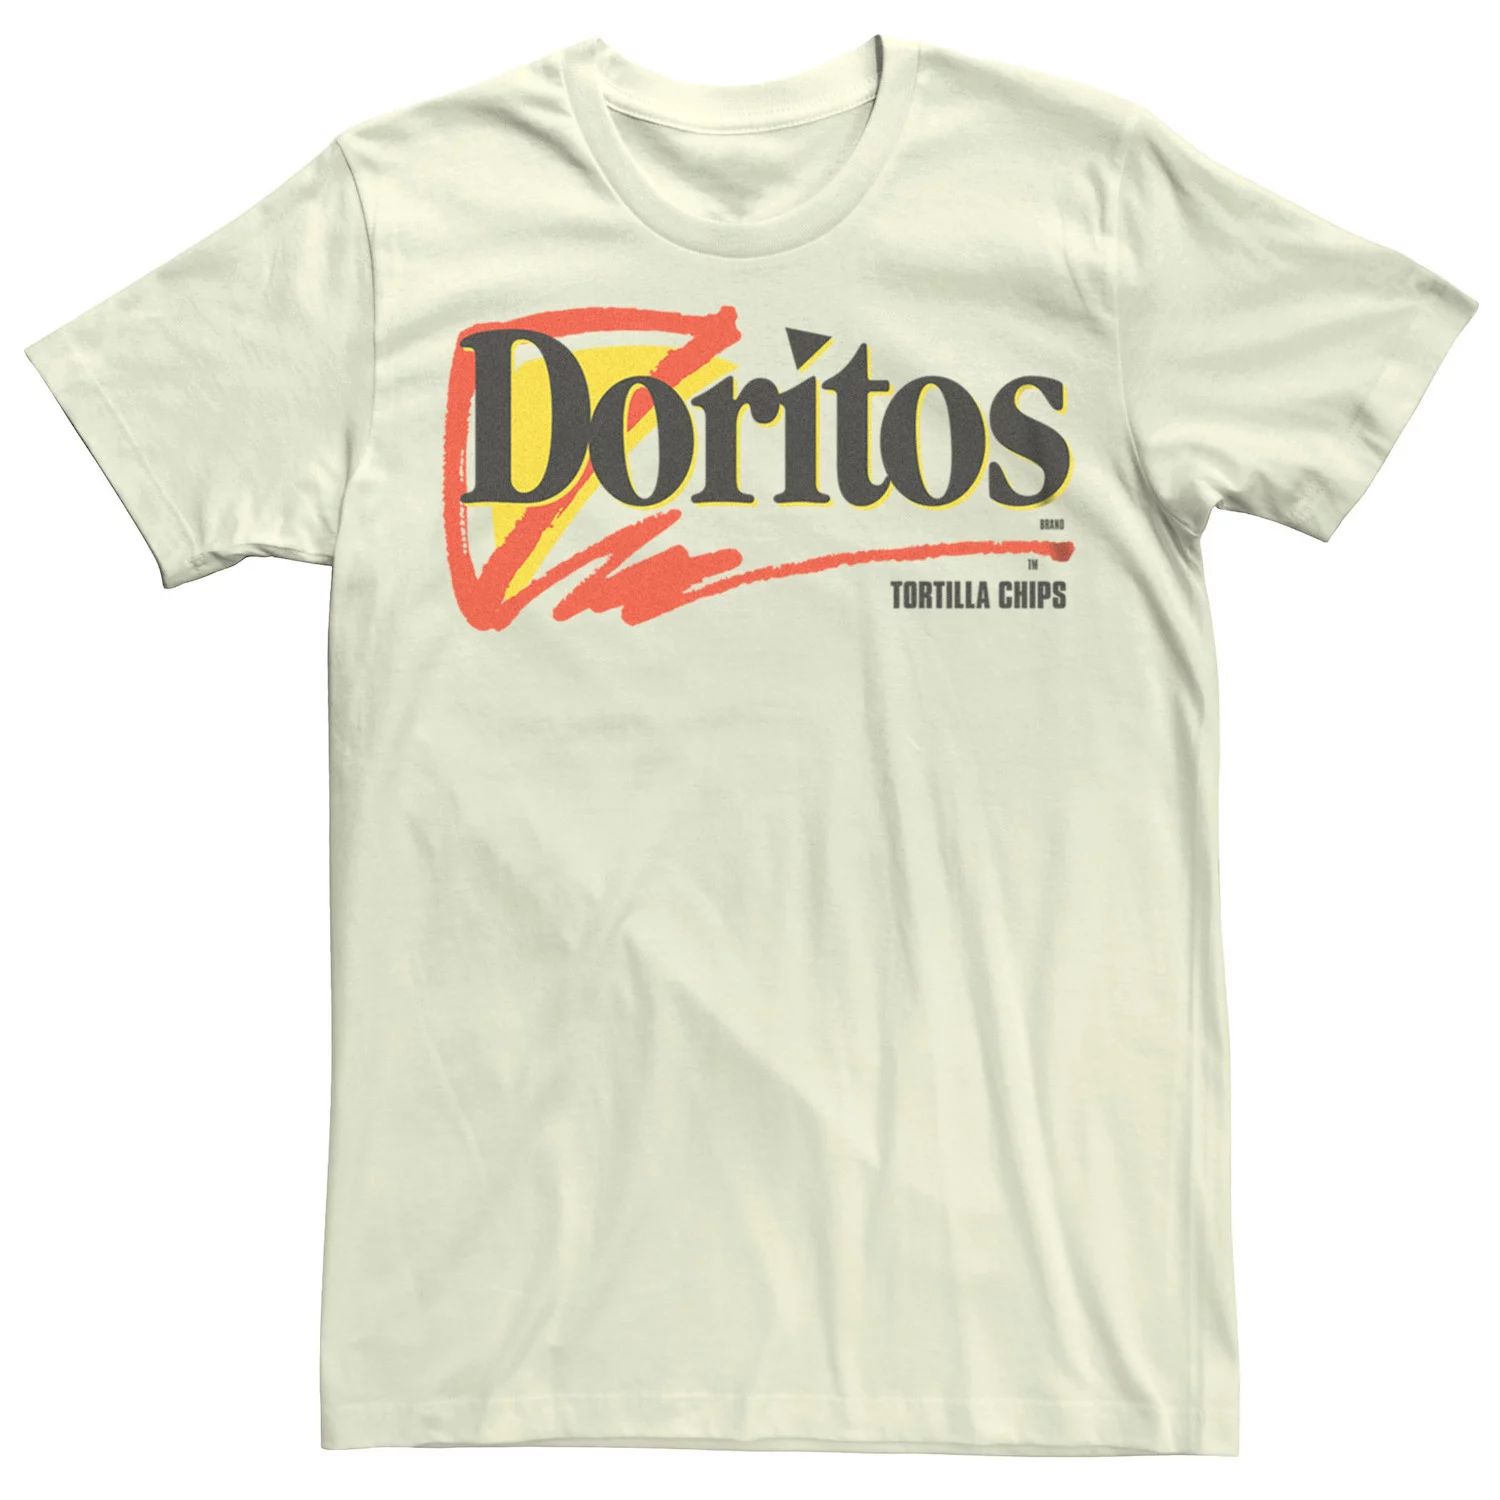 mister freed tortilla chips blue maize 135g Мужская футболка с логотипом Doritos Tortilla Chips Licensed Character